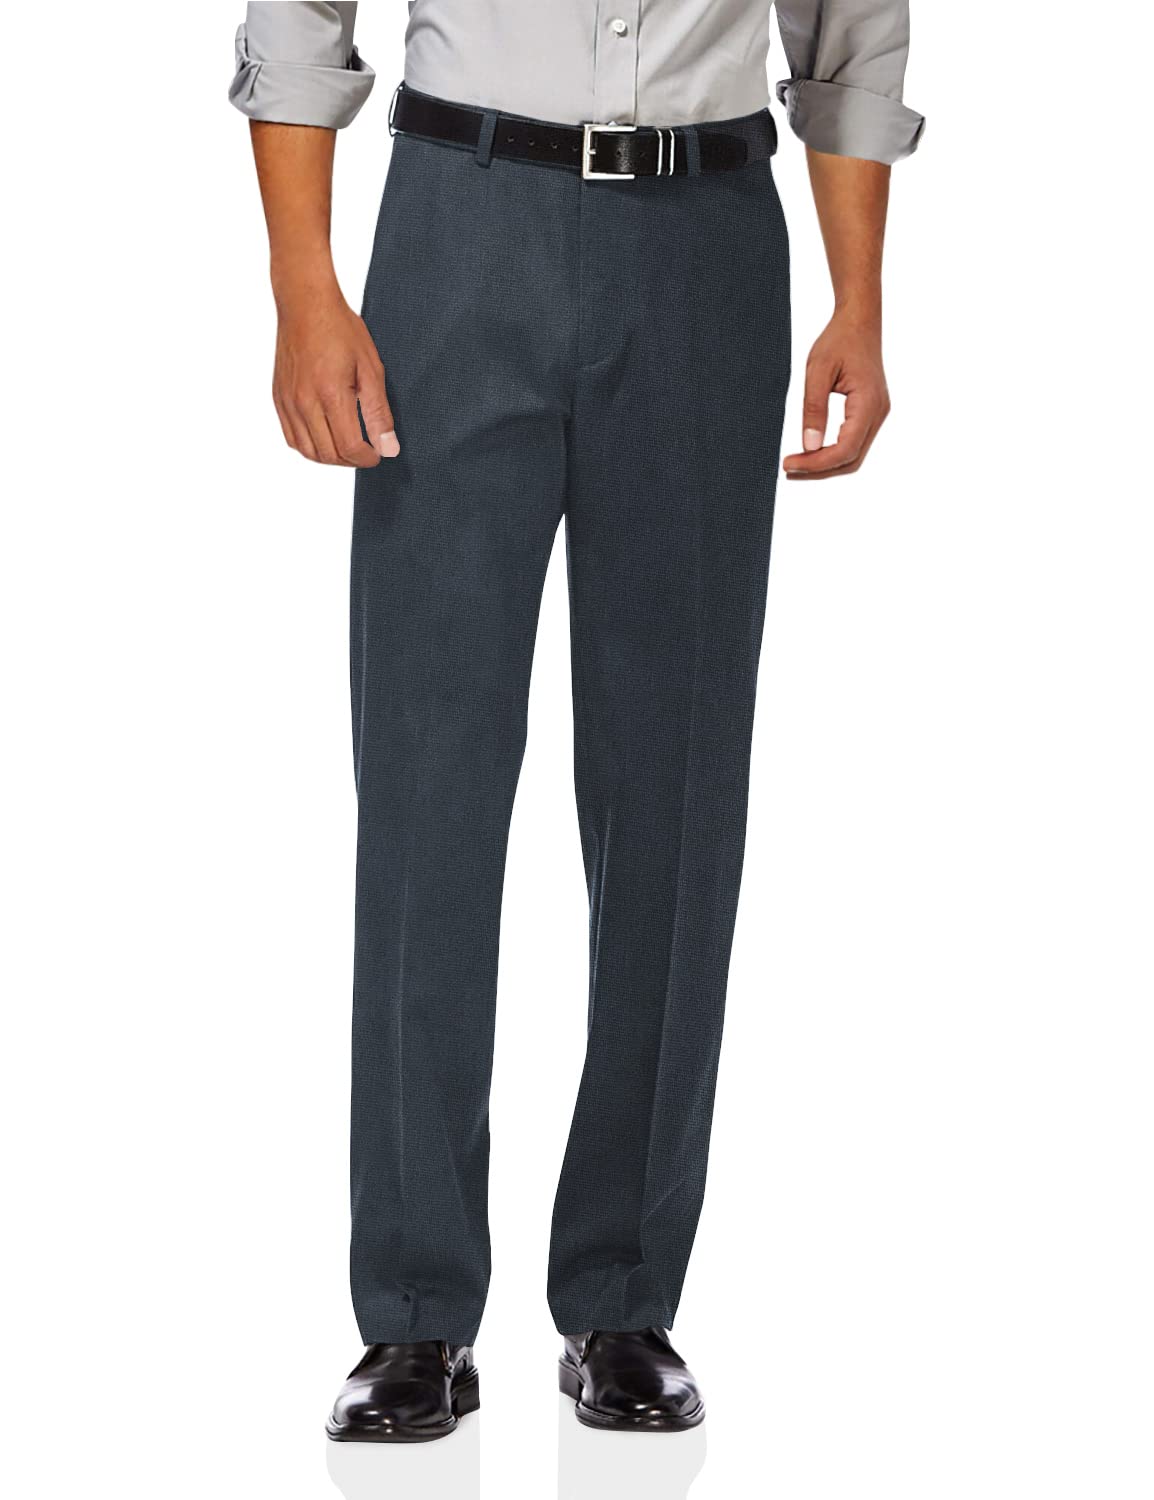 Score 5 Kirkland Men's No-Iron Dress Pants for $29.85 Shipped on Costco.com  (Just $5.95 Each)